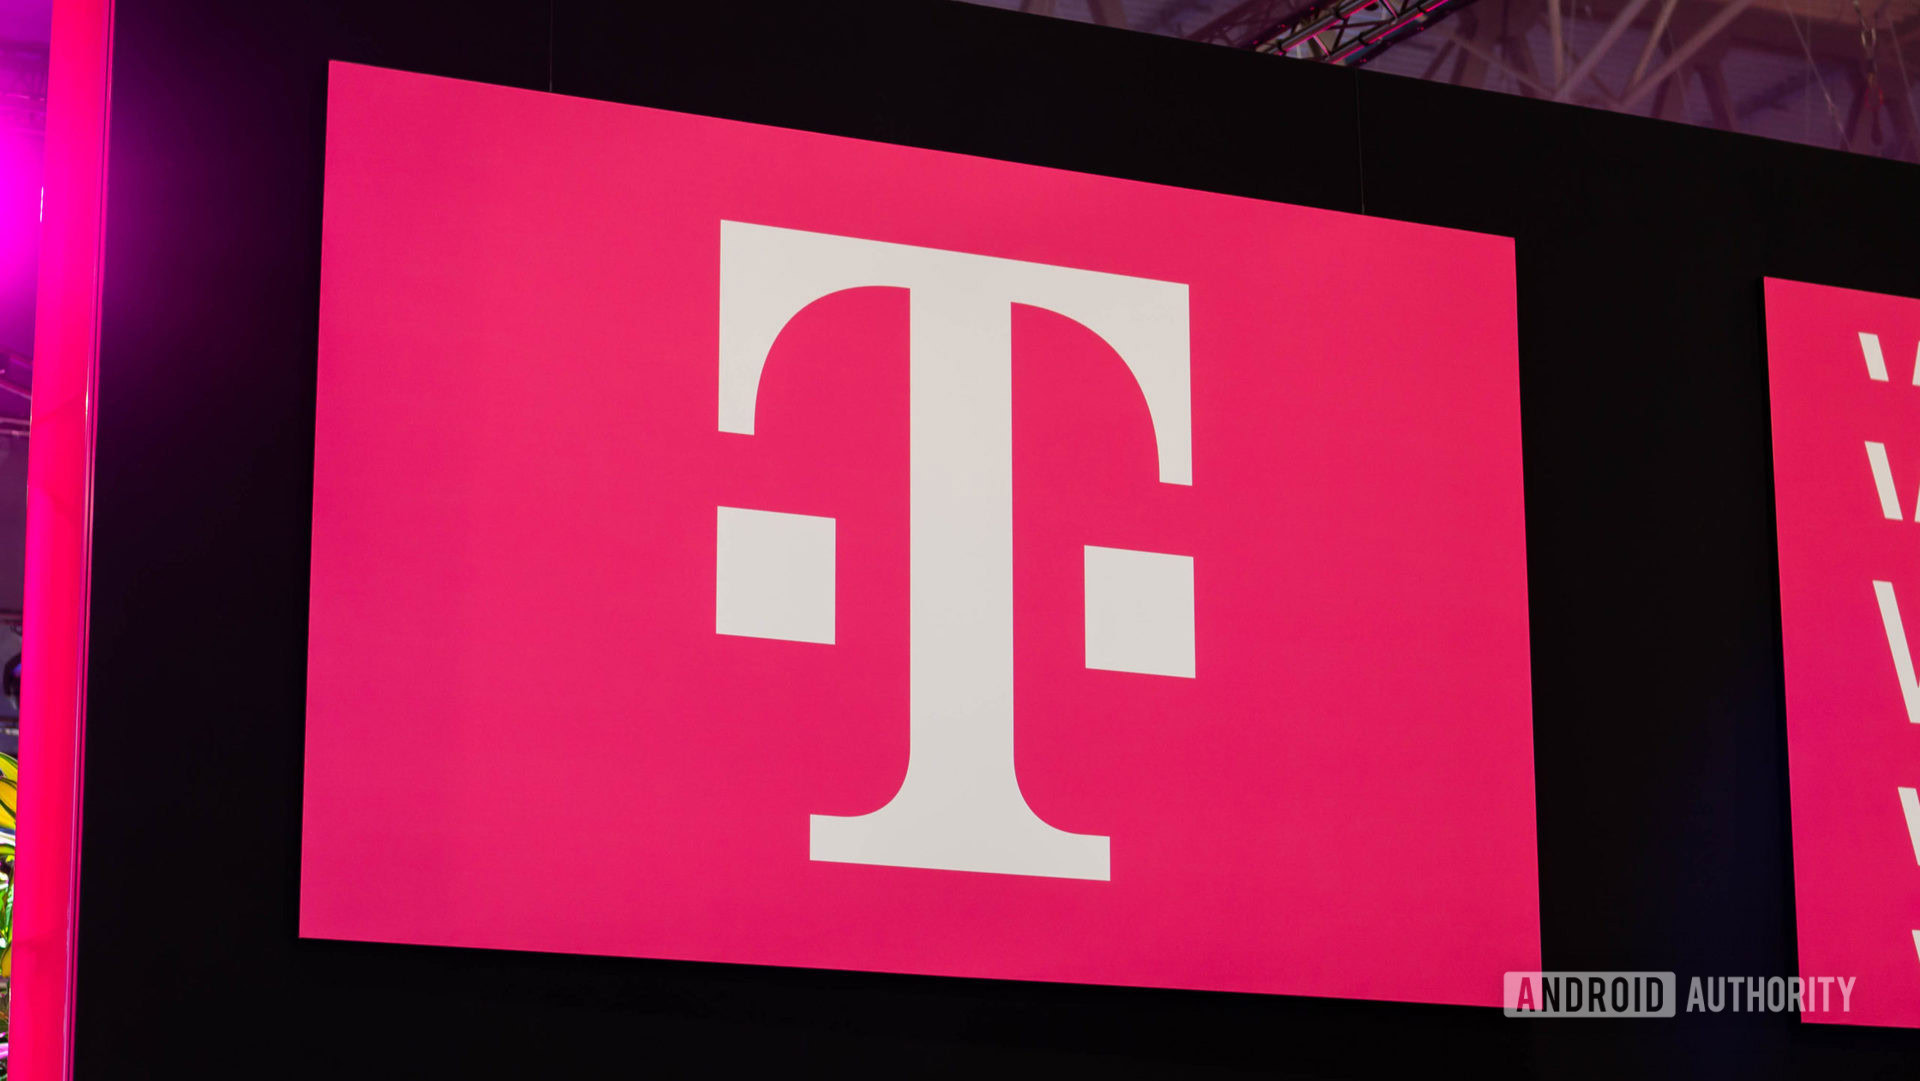 T Mobile logo on sign